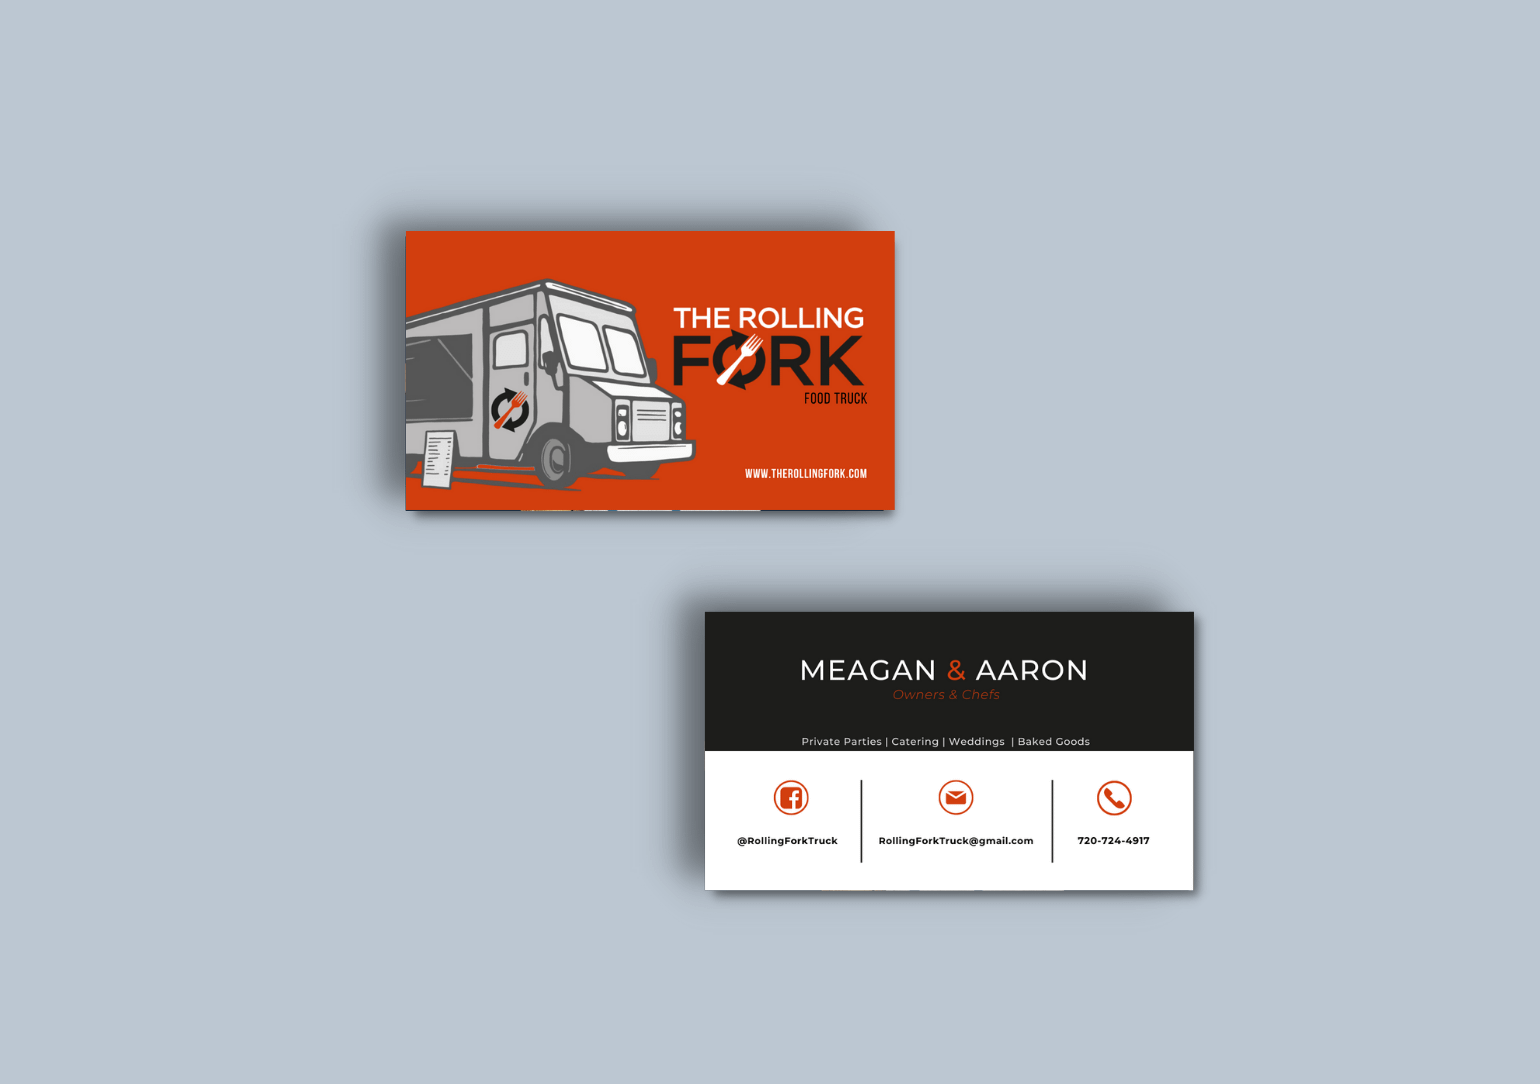 Food truck custom business cards